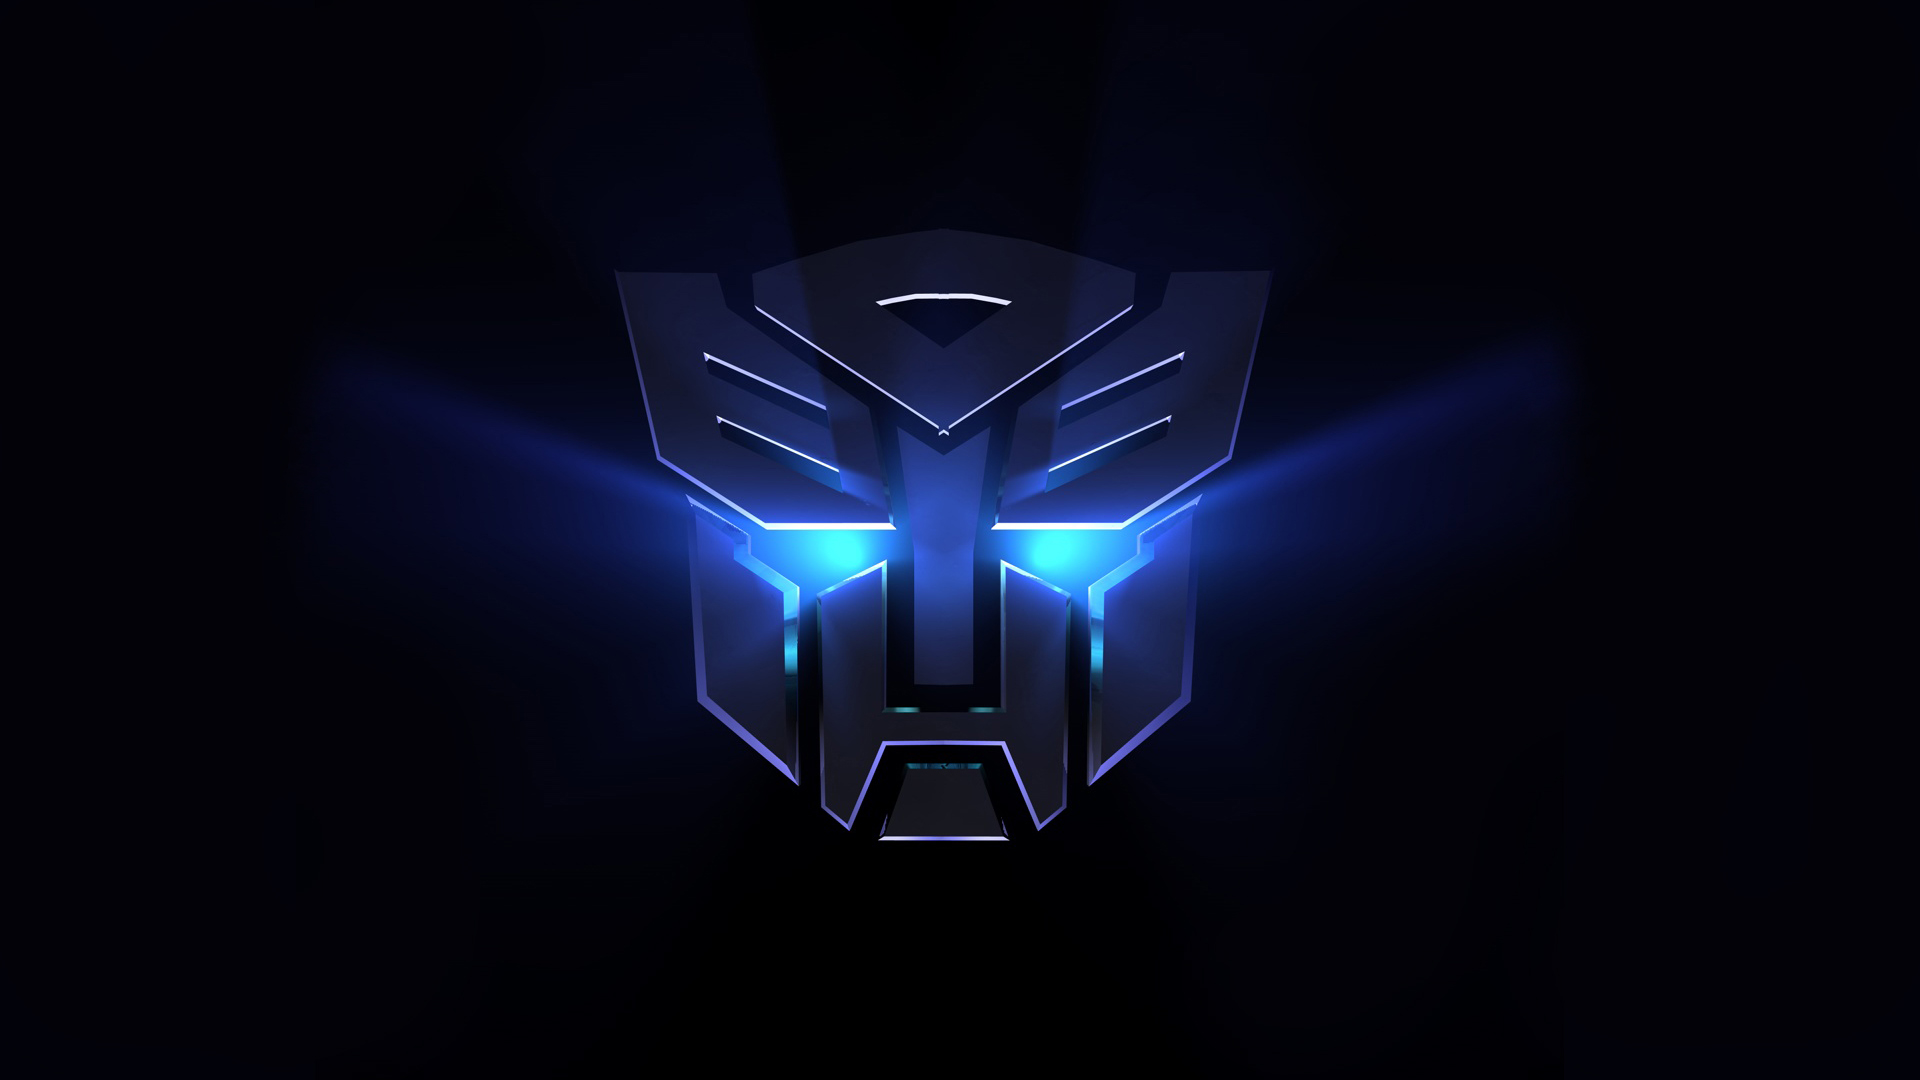 Download Transformers Logo Wallpaper HD Desktop pictures in high